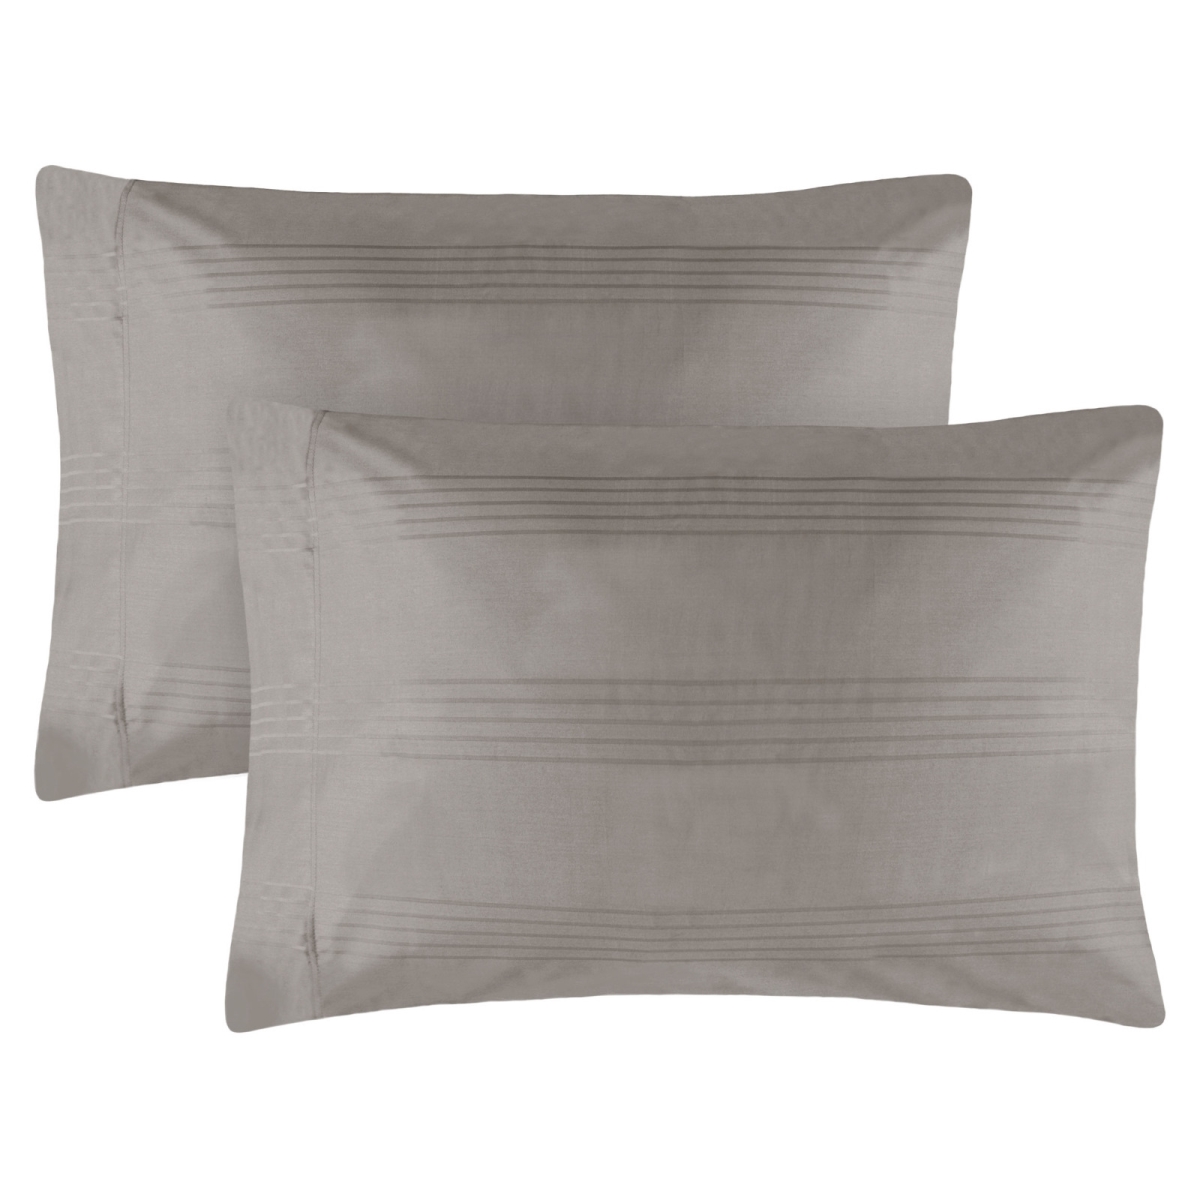 Yms008228 Premium 420 Thread Count 100 Percent Cotton Pillowcase Set, Charcoal - Standard - 2 Piece